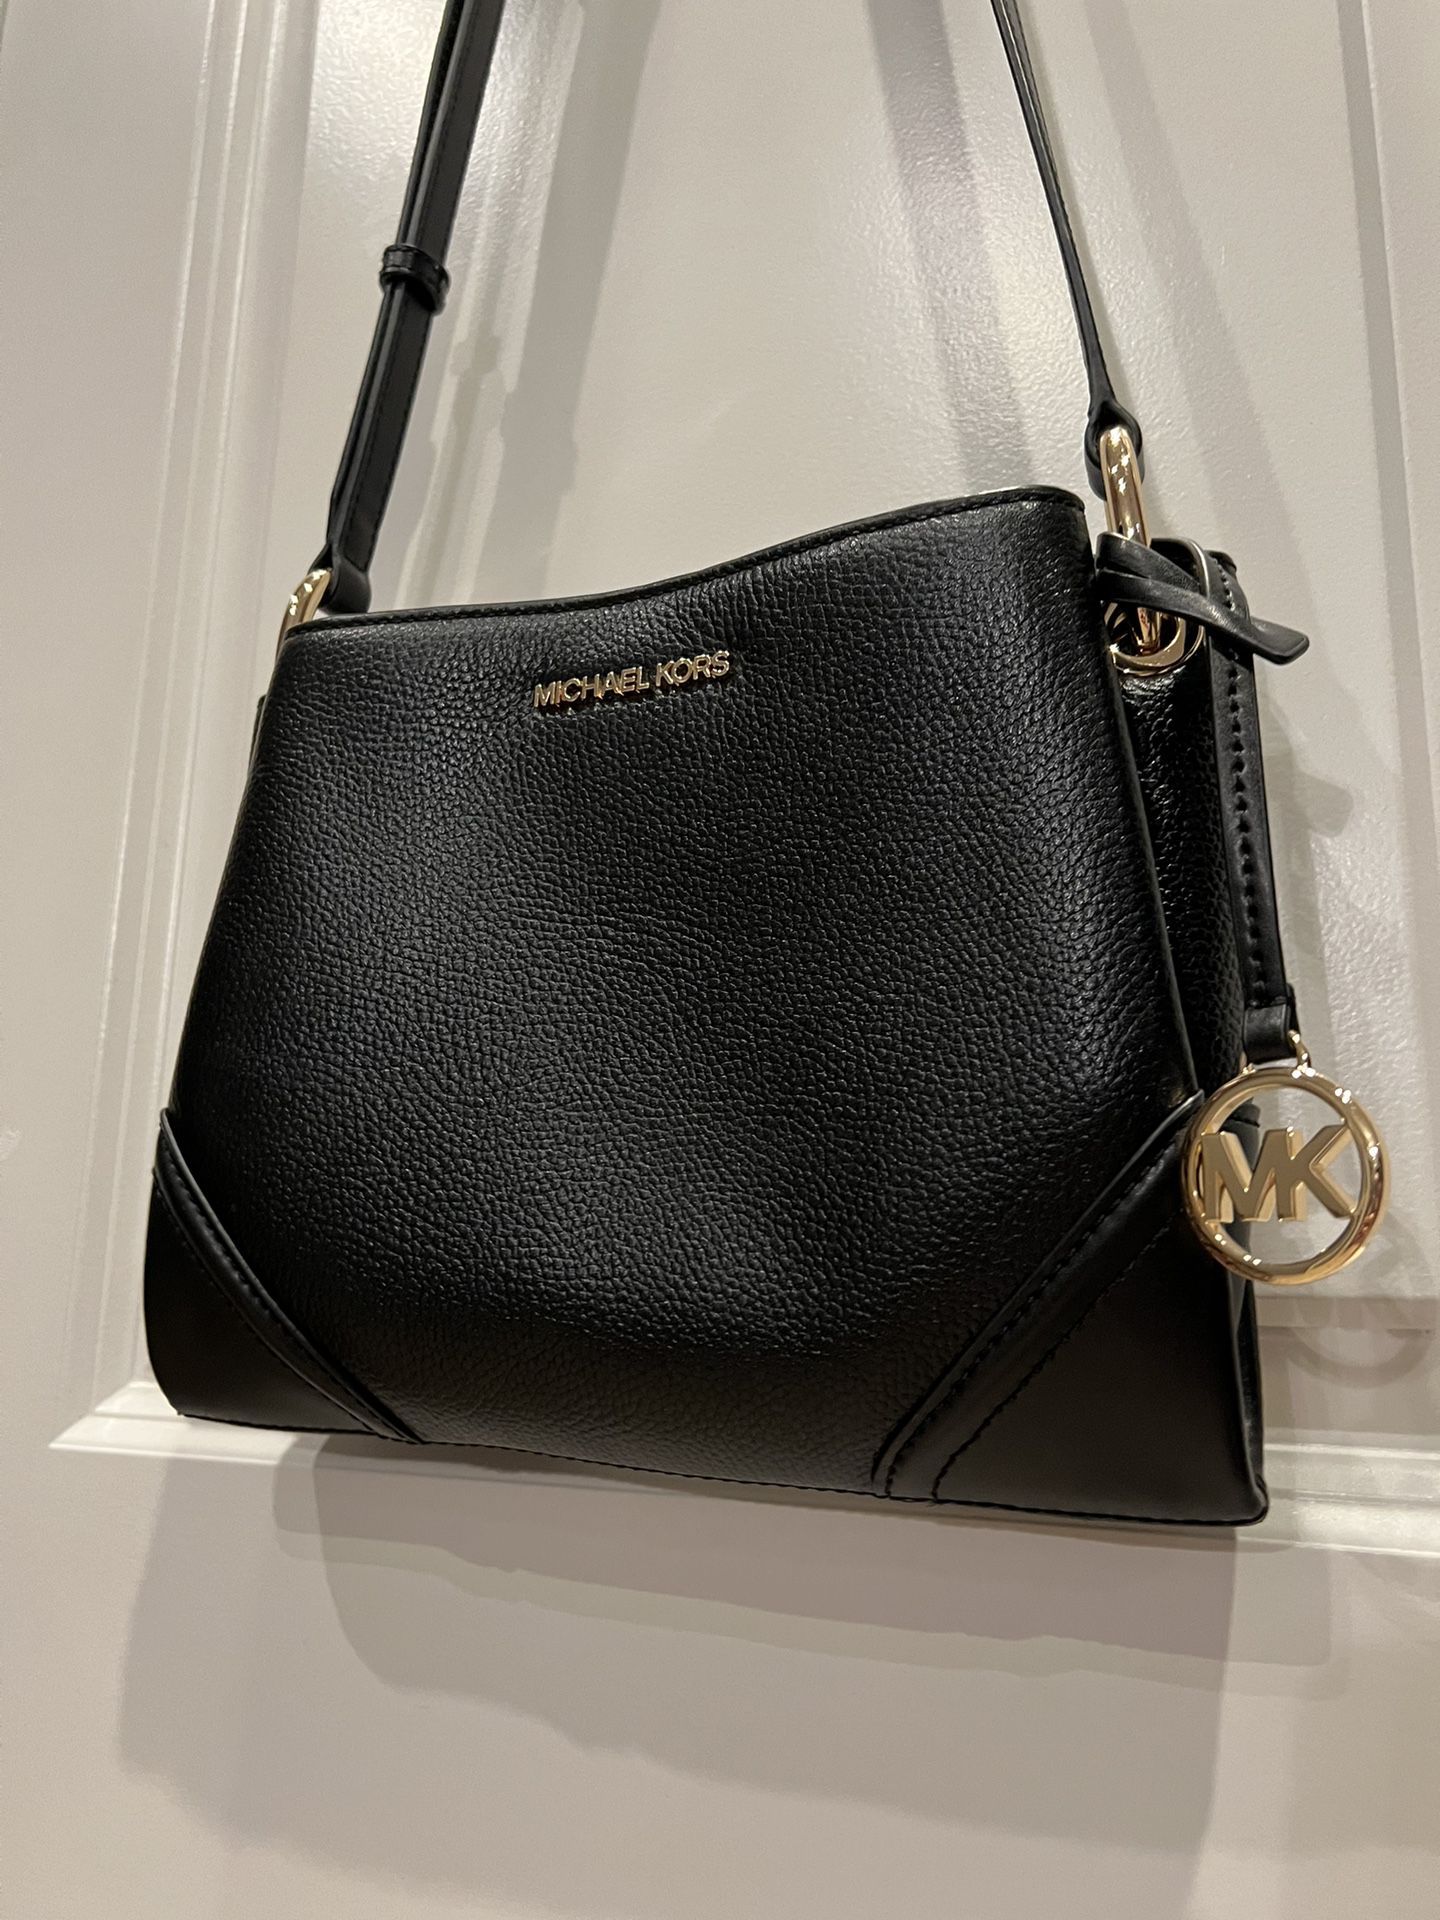 New – Michael Kors Crossbody Bag, Genuine Black Leather | Michael Kors Purse